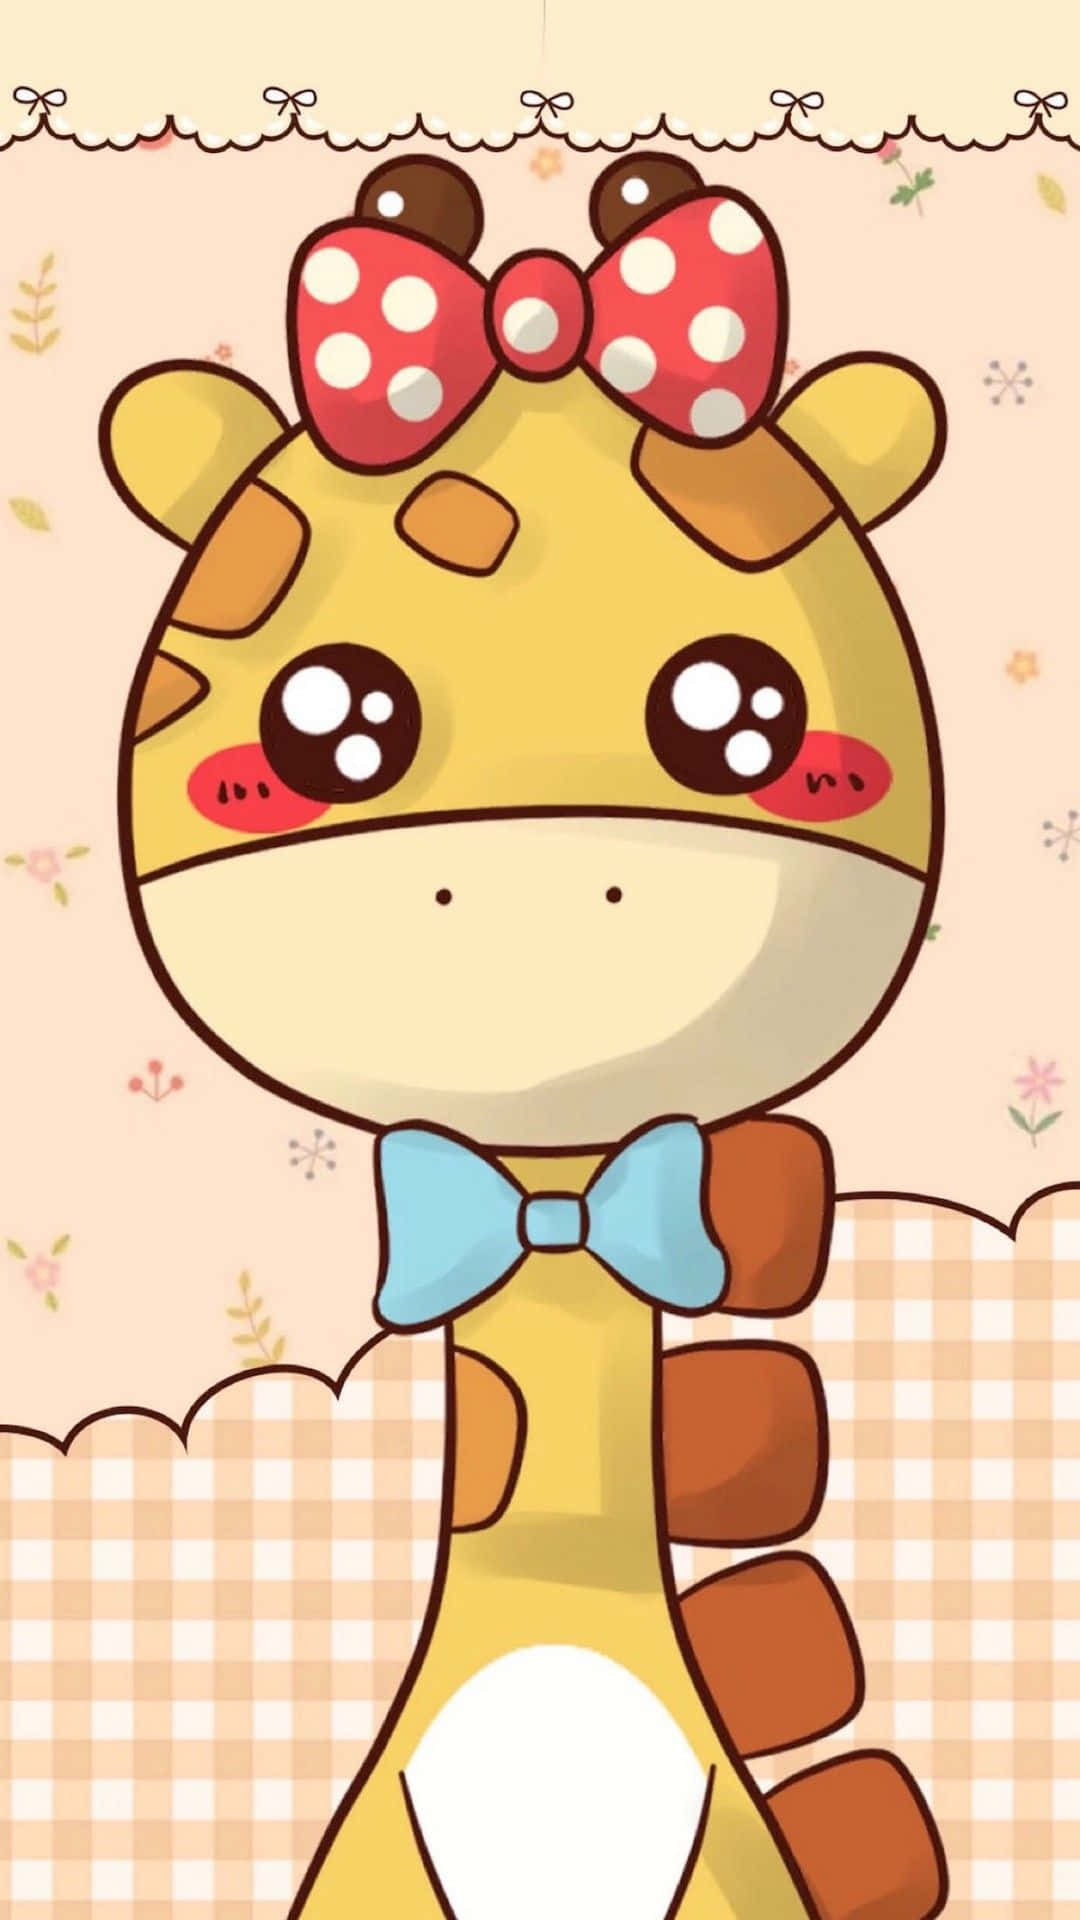 Adorable Kawaii Giraffe with Colorful Polka Dots Wallpaper